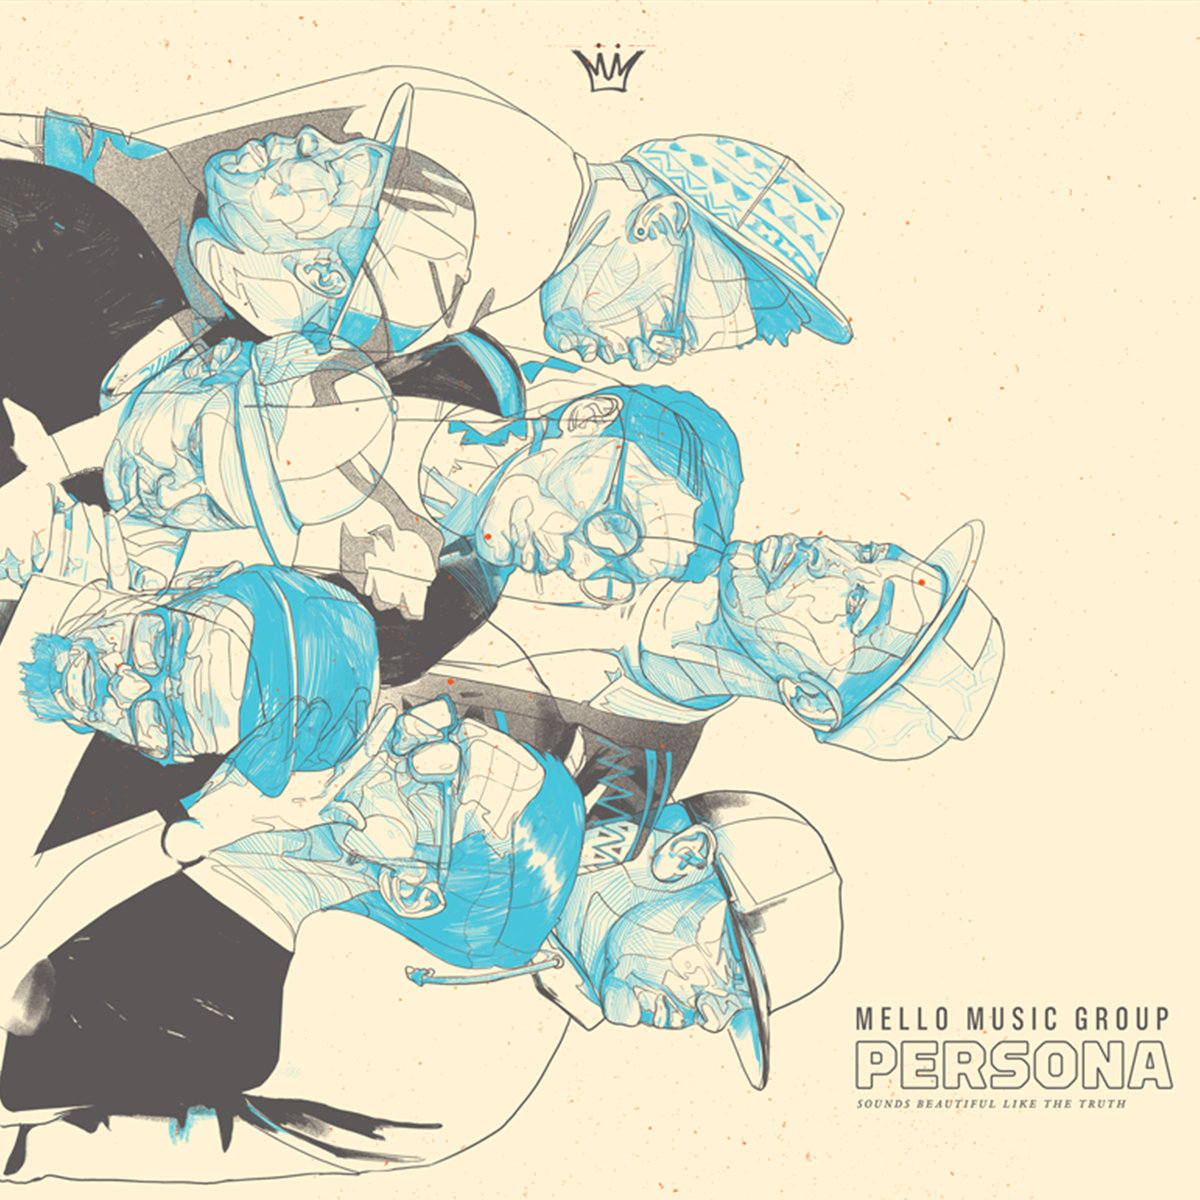 Mello Music Group “Persona” Various Artist 2015 Album Release